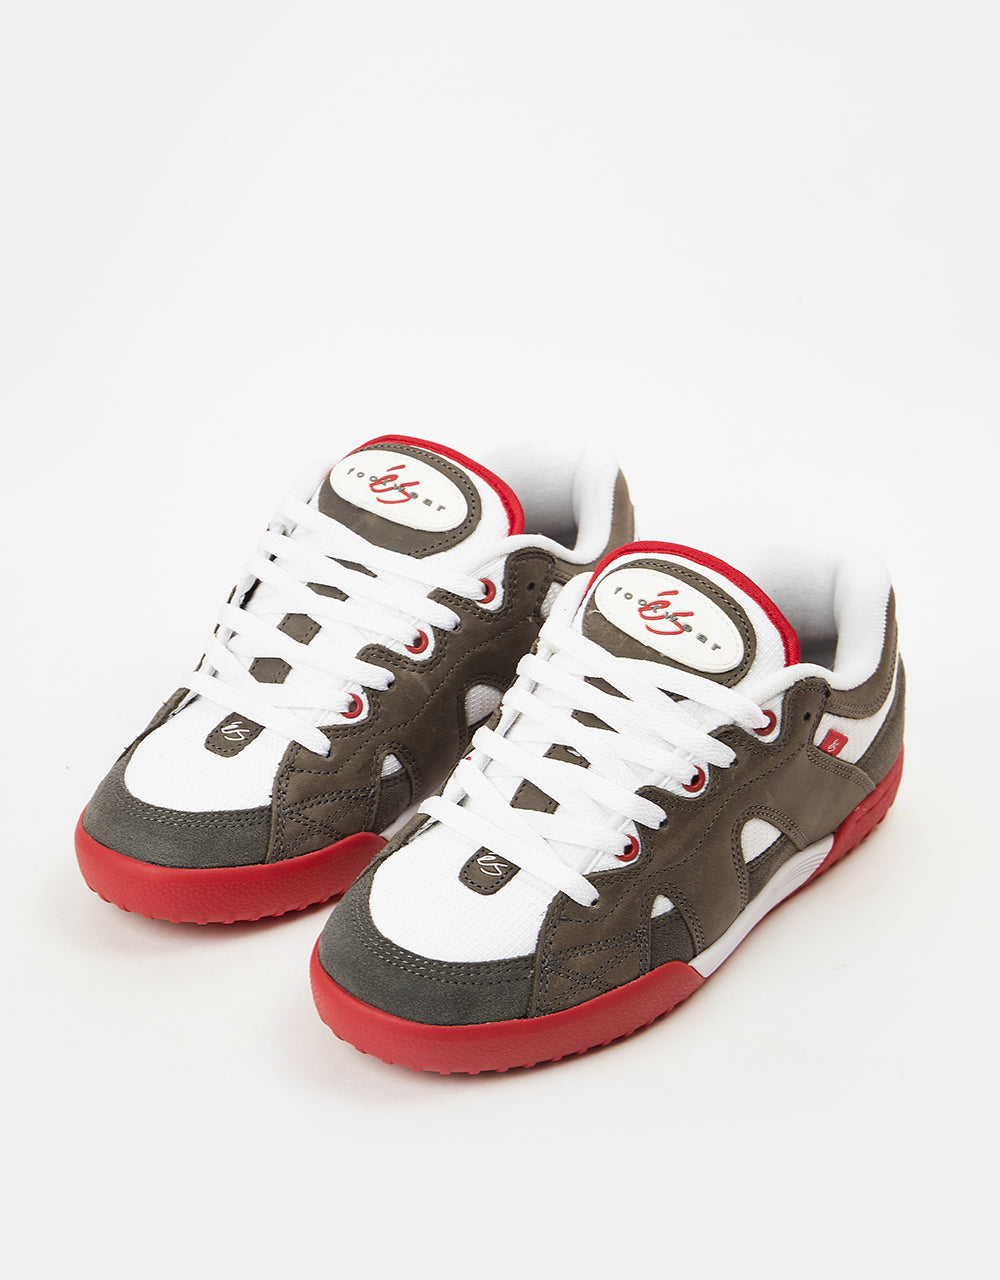 éS One Nine 7 Skate Shoes - Grey/White/Red